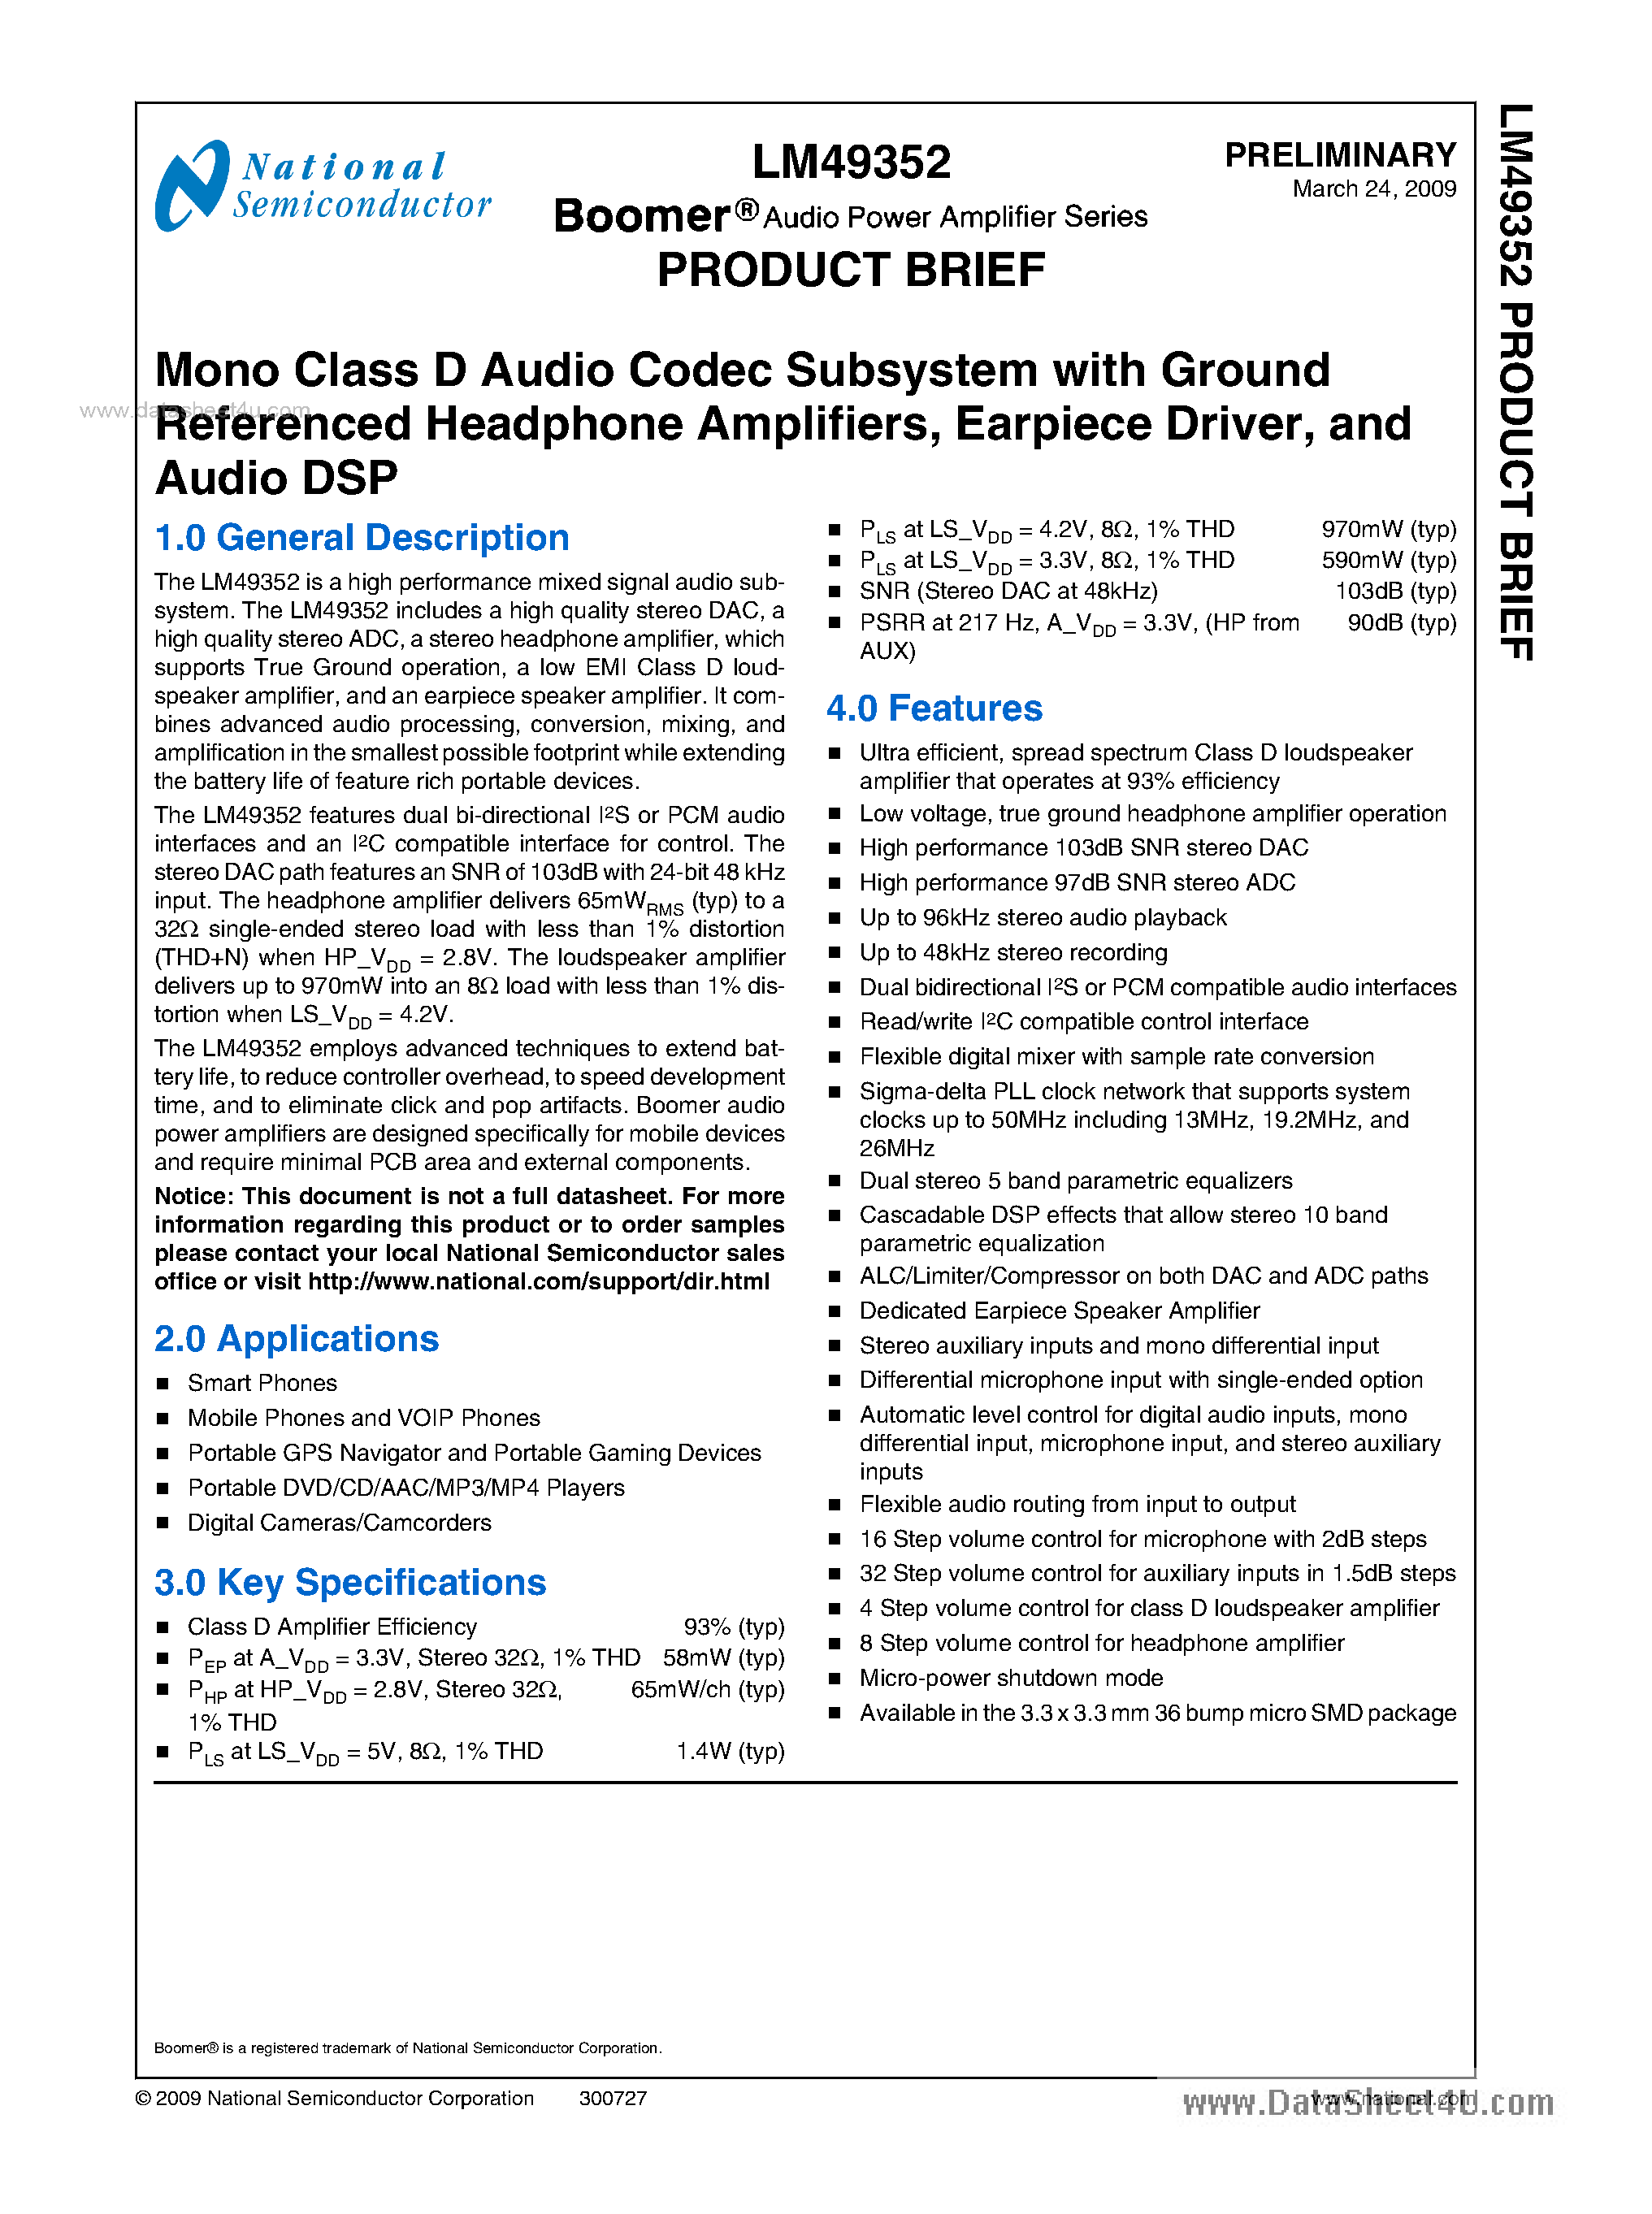 Datasheet LM49352 - Mono Class D Audio Codec Subsytem page 1